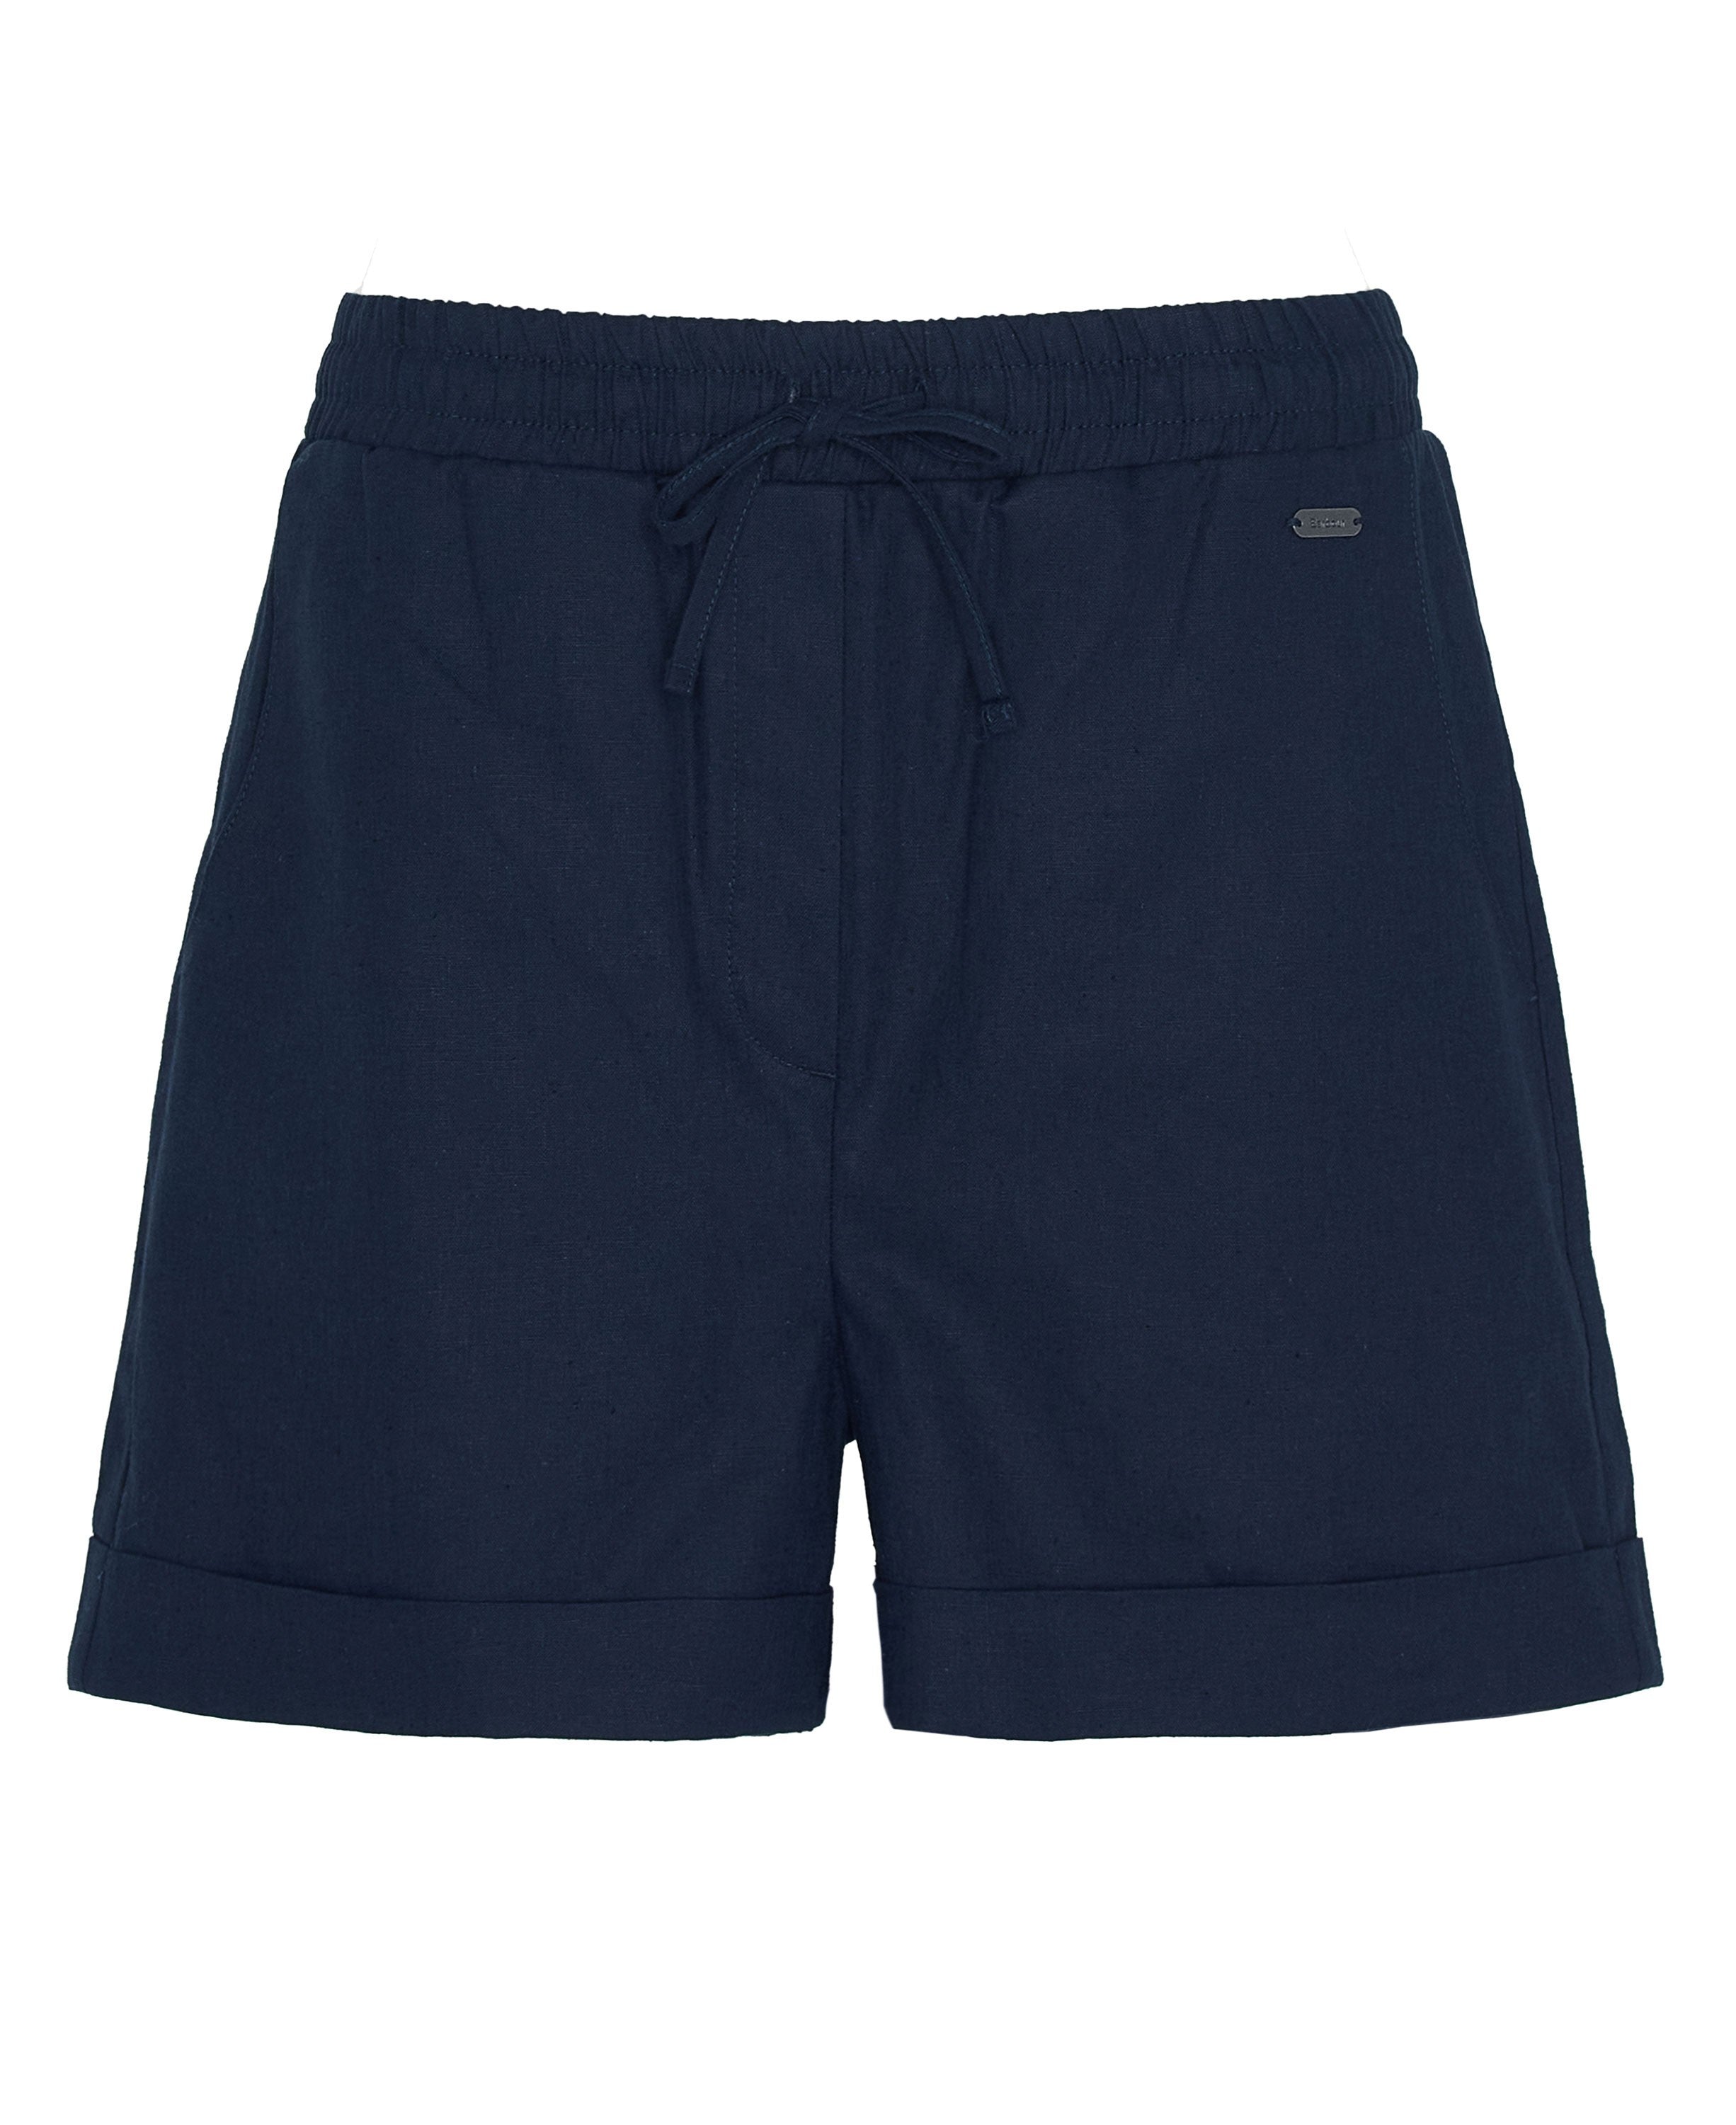 Elsden Shorts - Navy